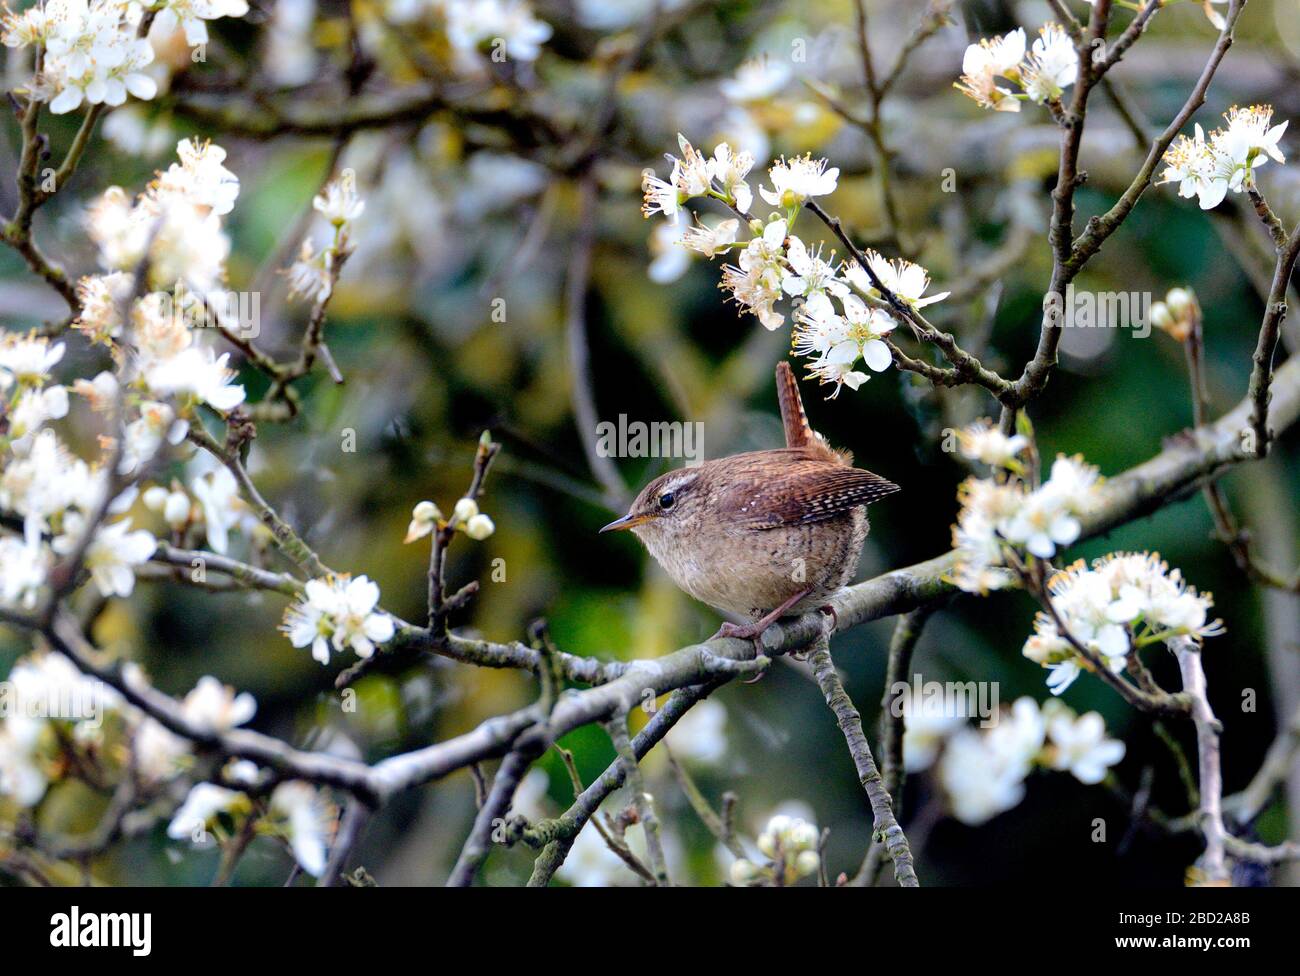 Wren (Troglodytes troglodytes) perché dans un arbre au printemps. Kent, Royaume-Uni, avril Banque D'Images